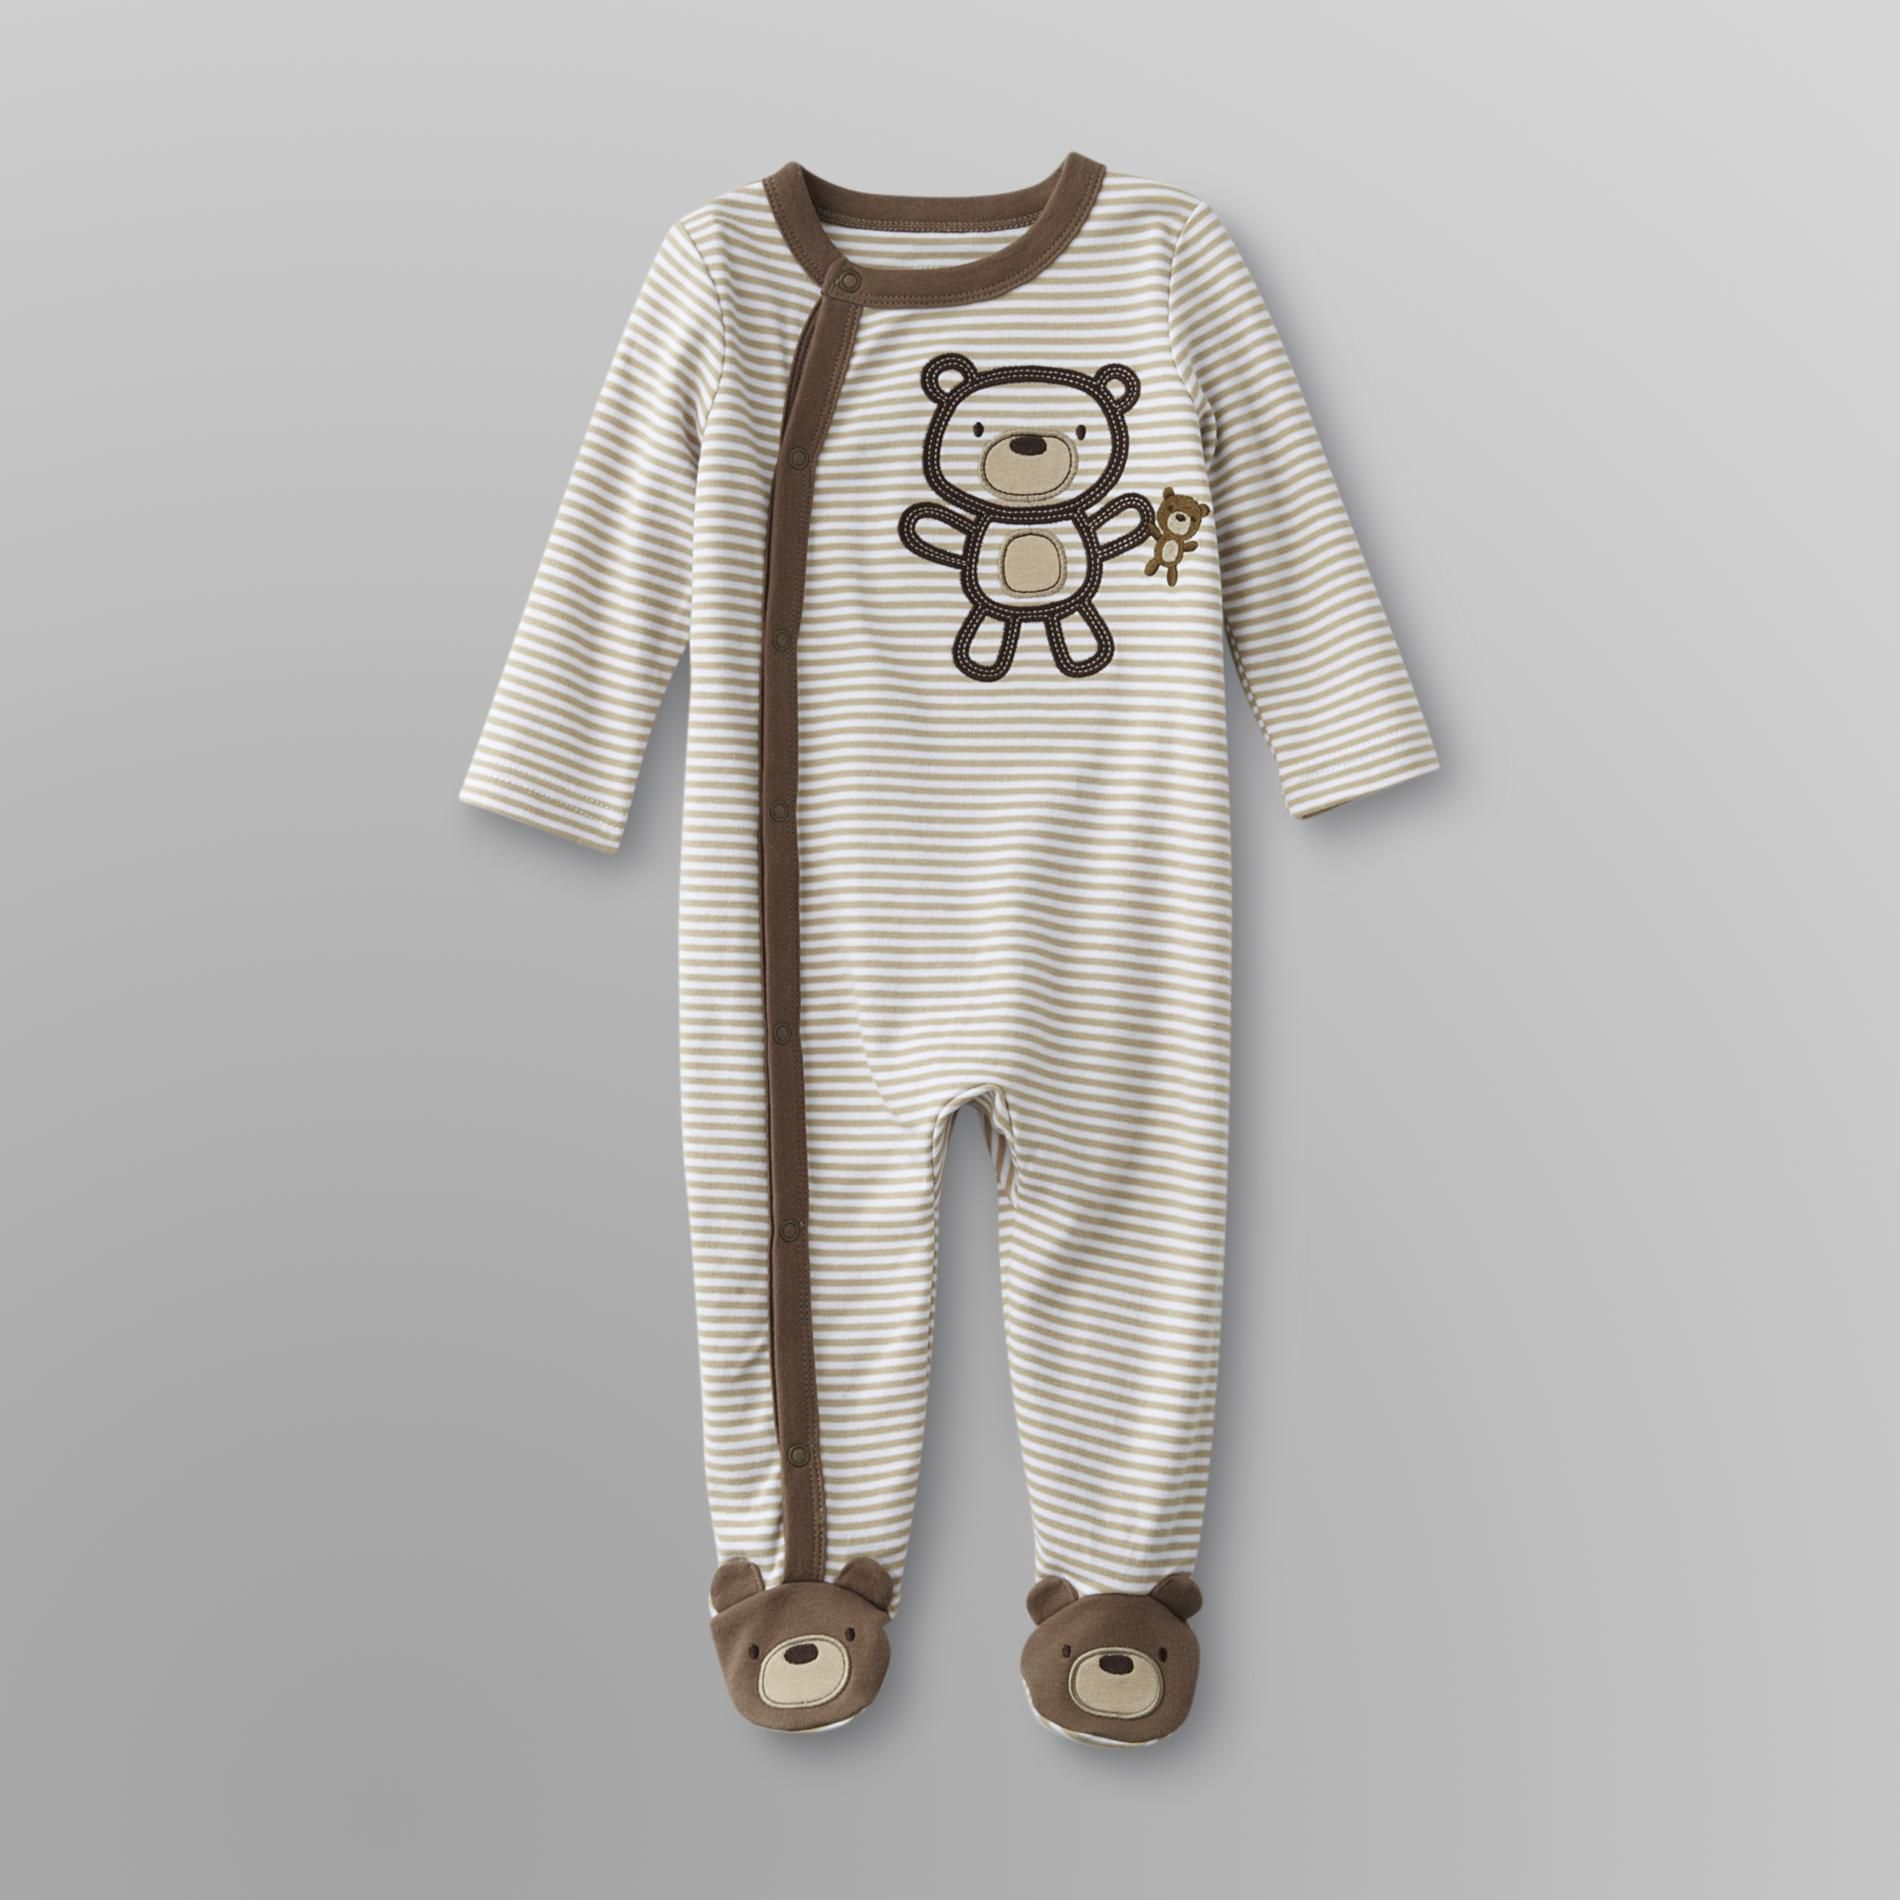 Little Wonders Newborn & Infant Boy's Sleeper Pajamas